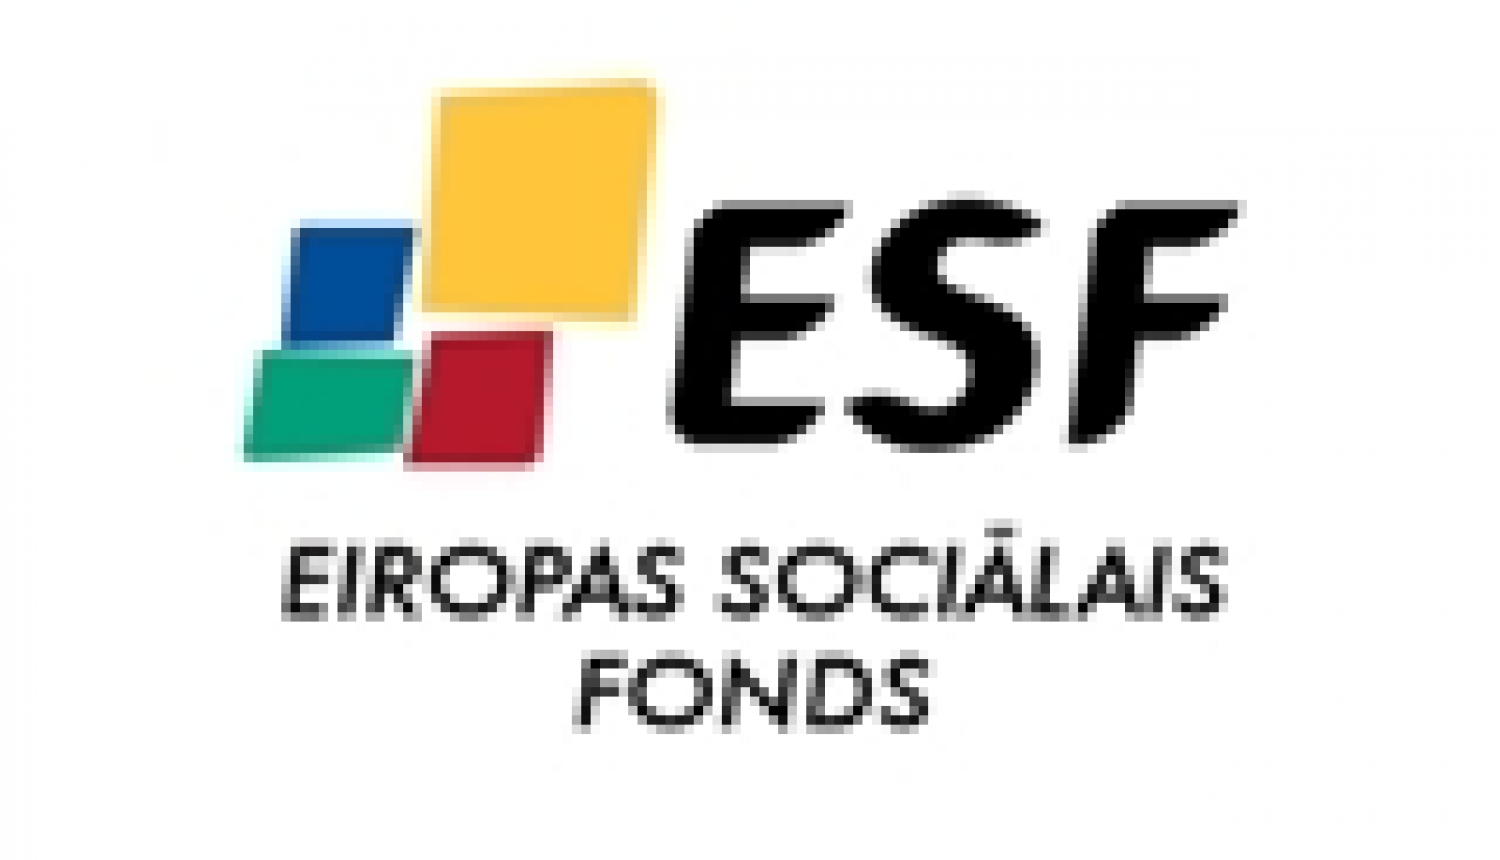 ESF_logo_ar_nosaukumu_istais_m